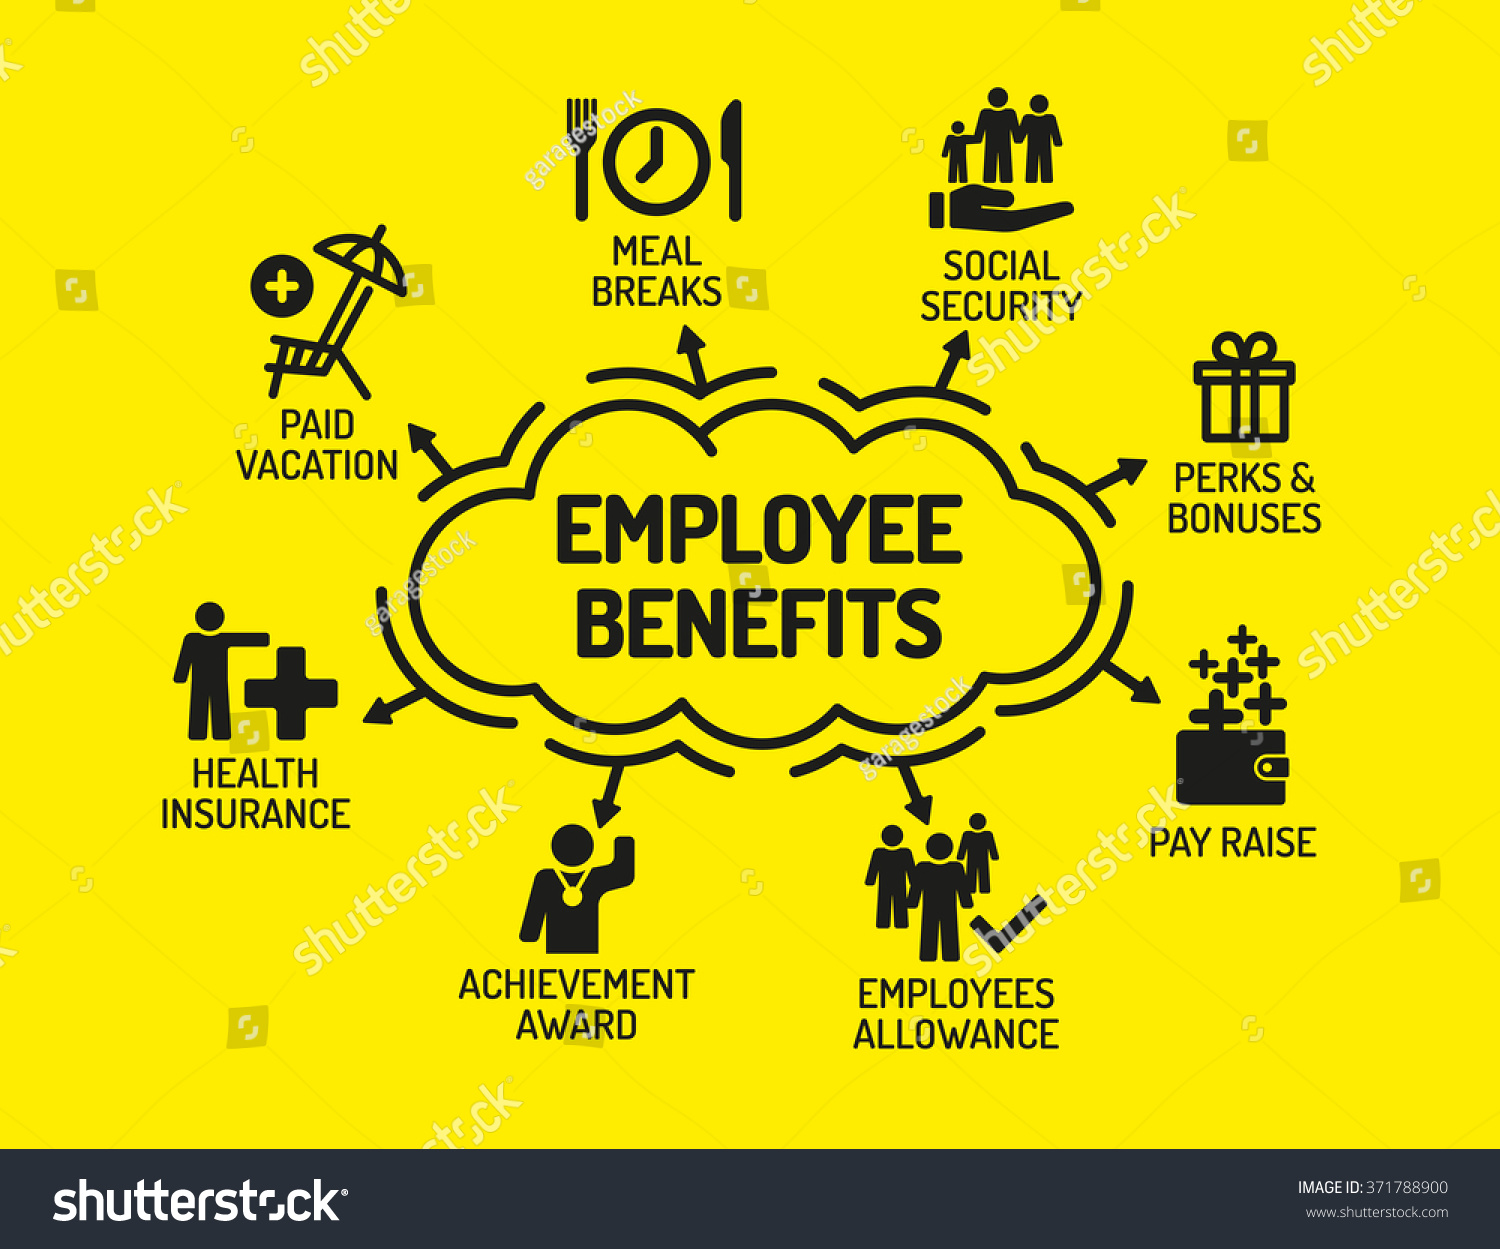 free clipart employee benefits - photo #24